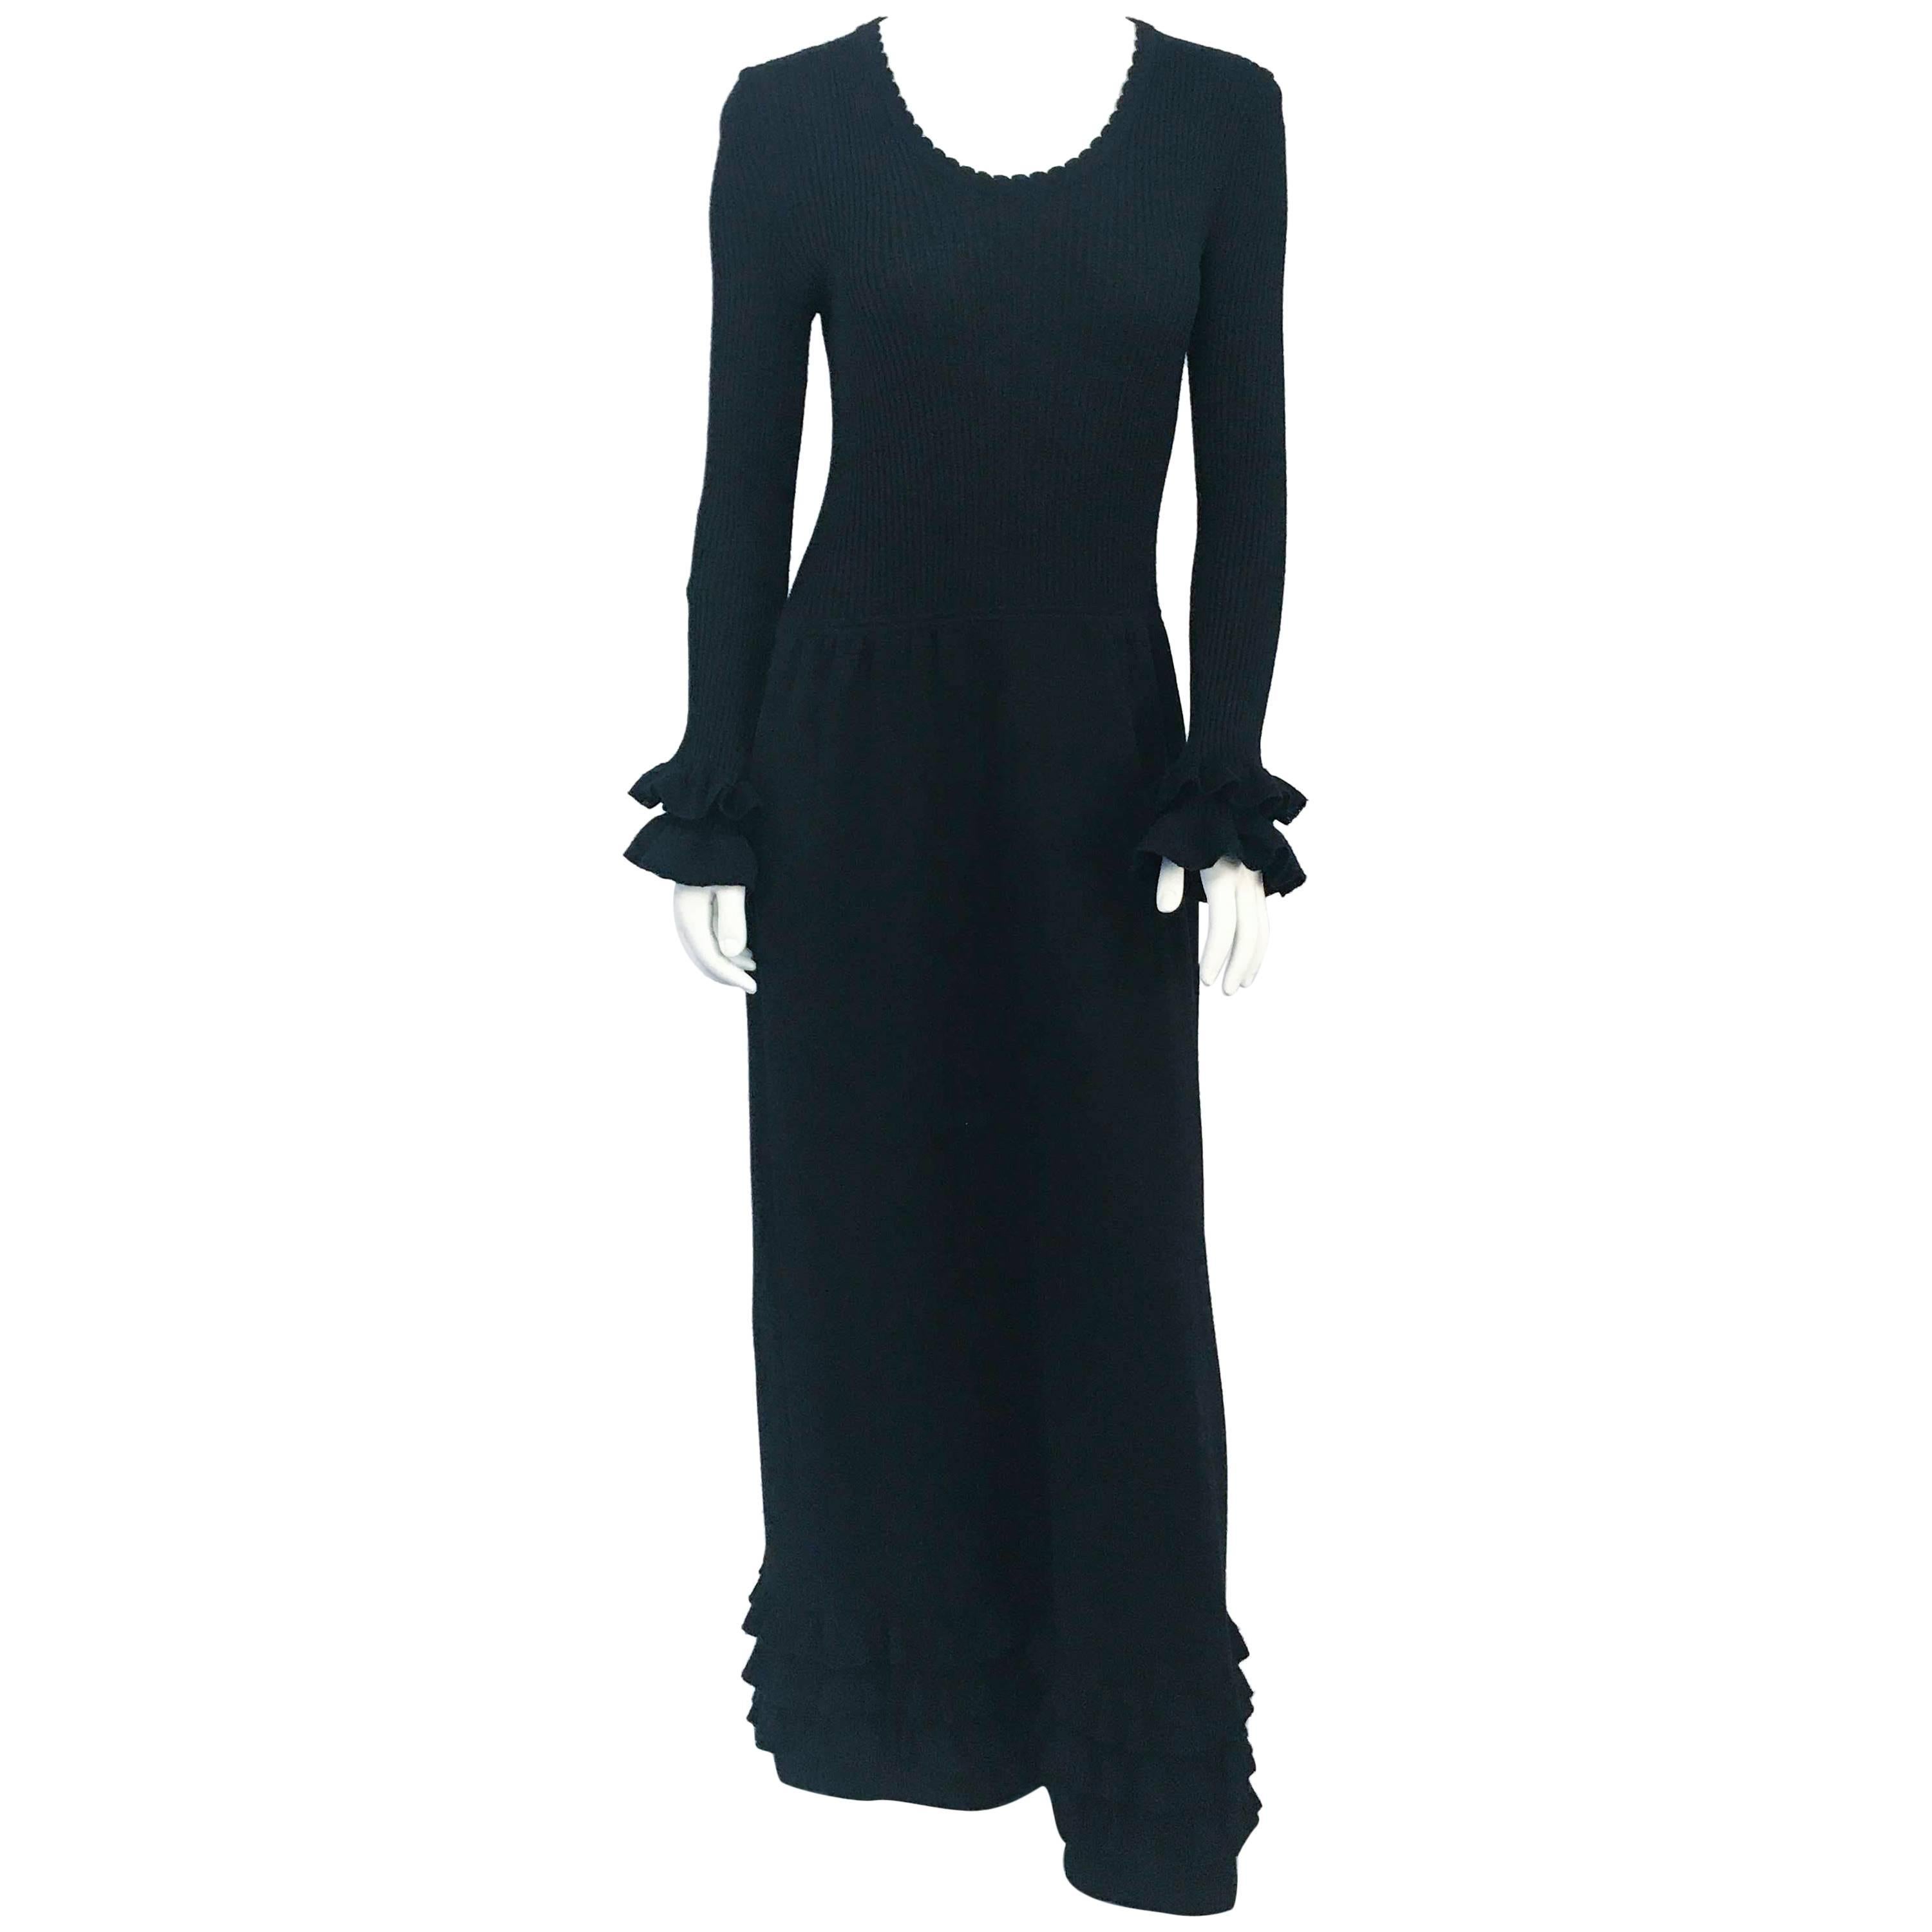 1970s Banff LTD by Gianni Ferri Black Knit Ruffled Dress